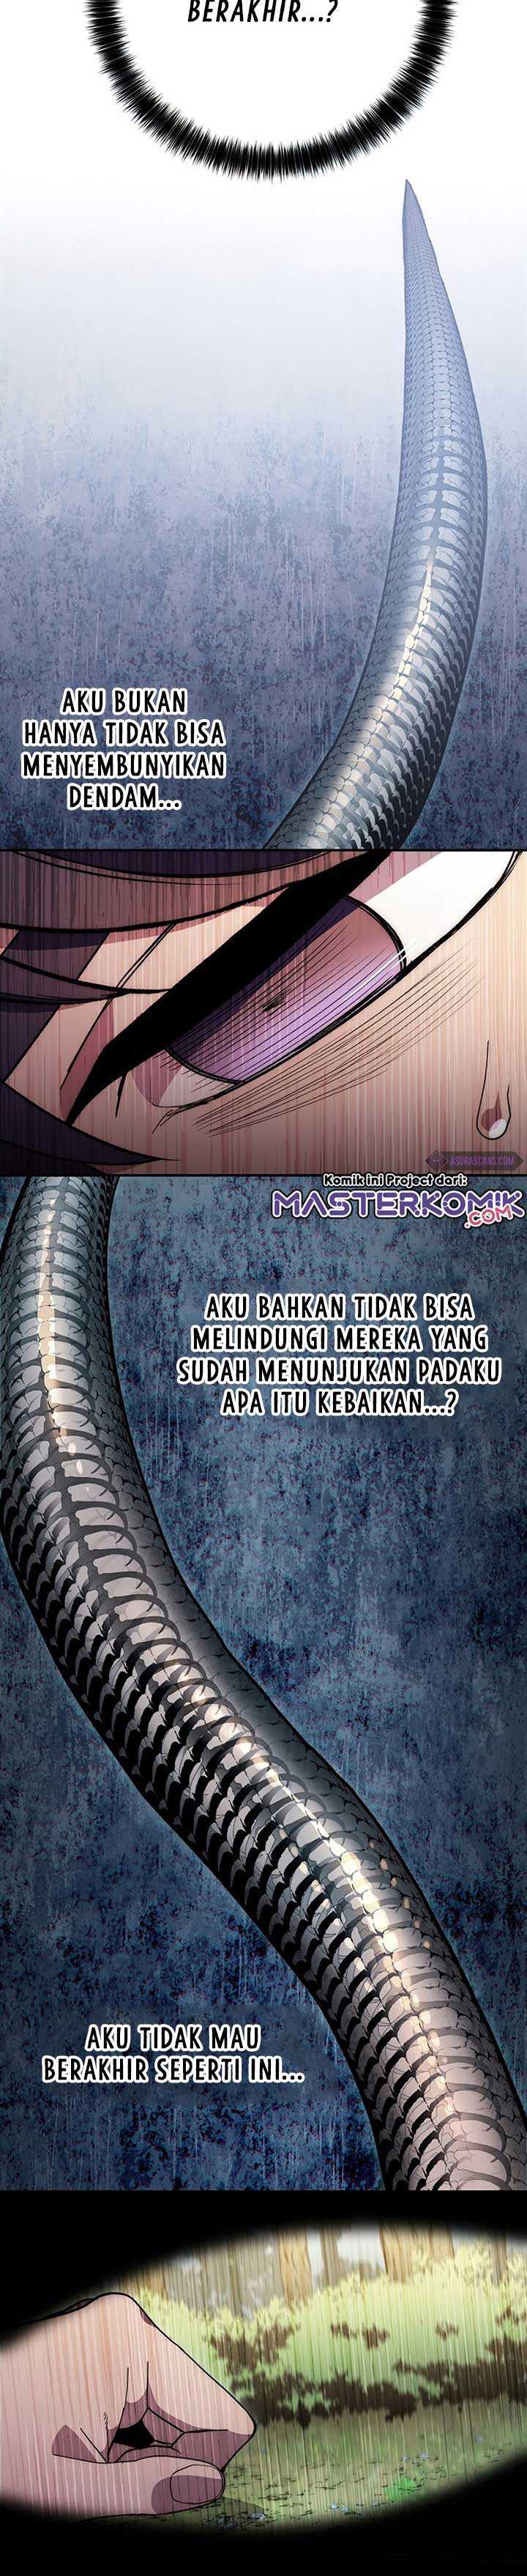 Legend of Asura – The Venom Dragon Chapter 66